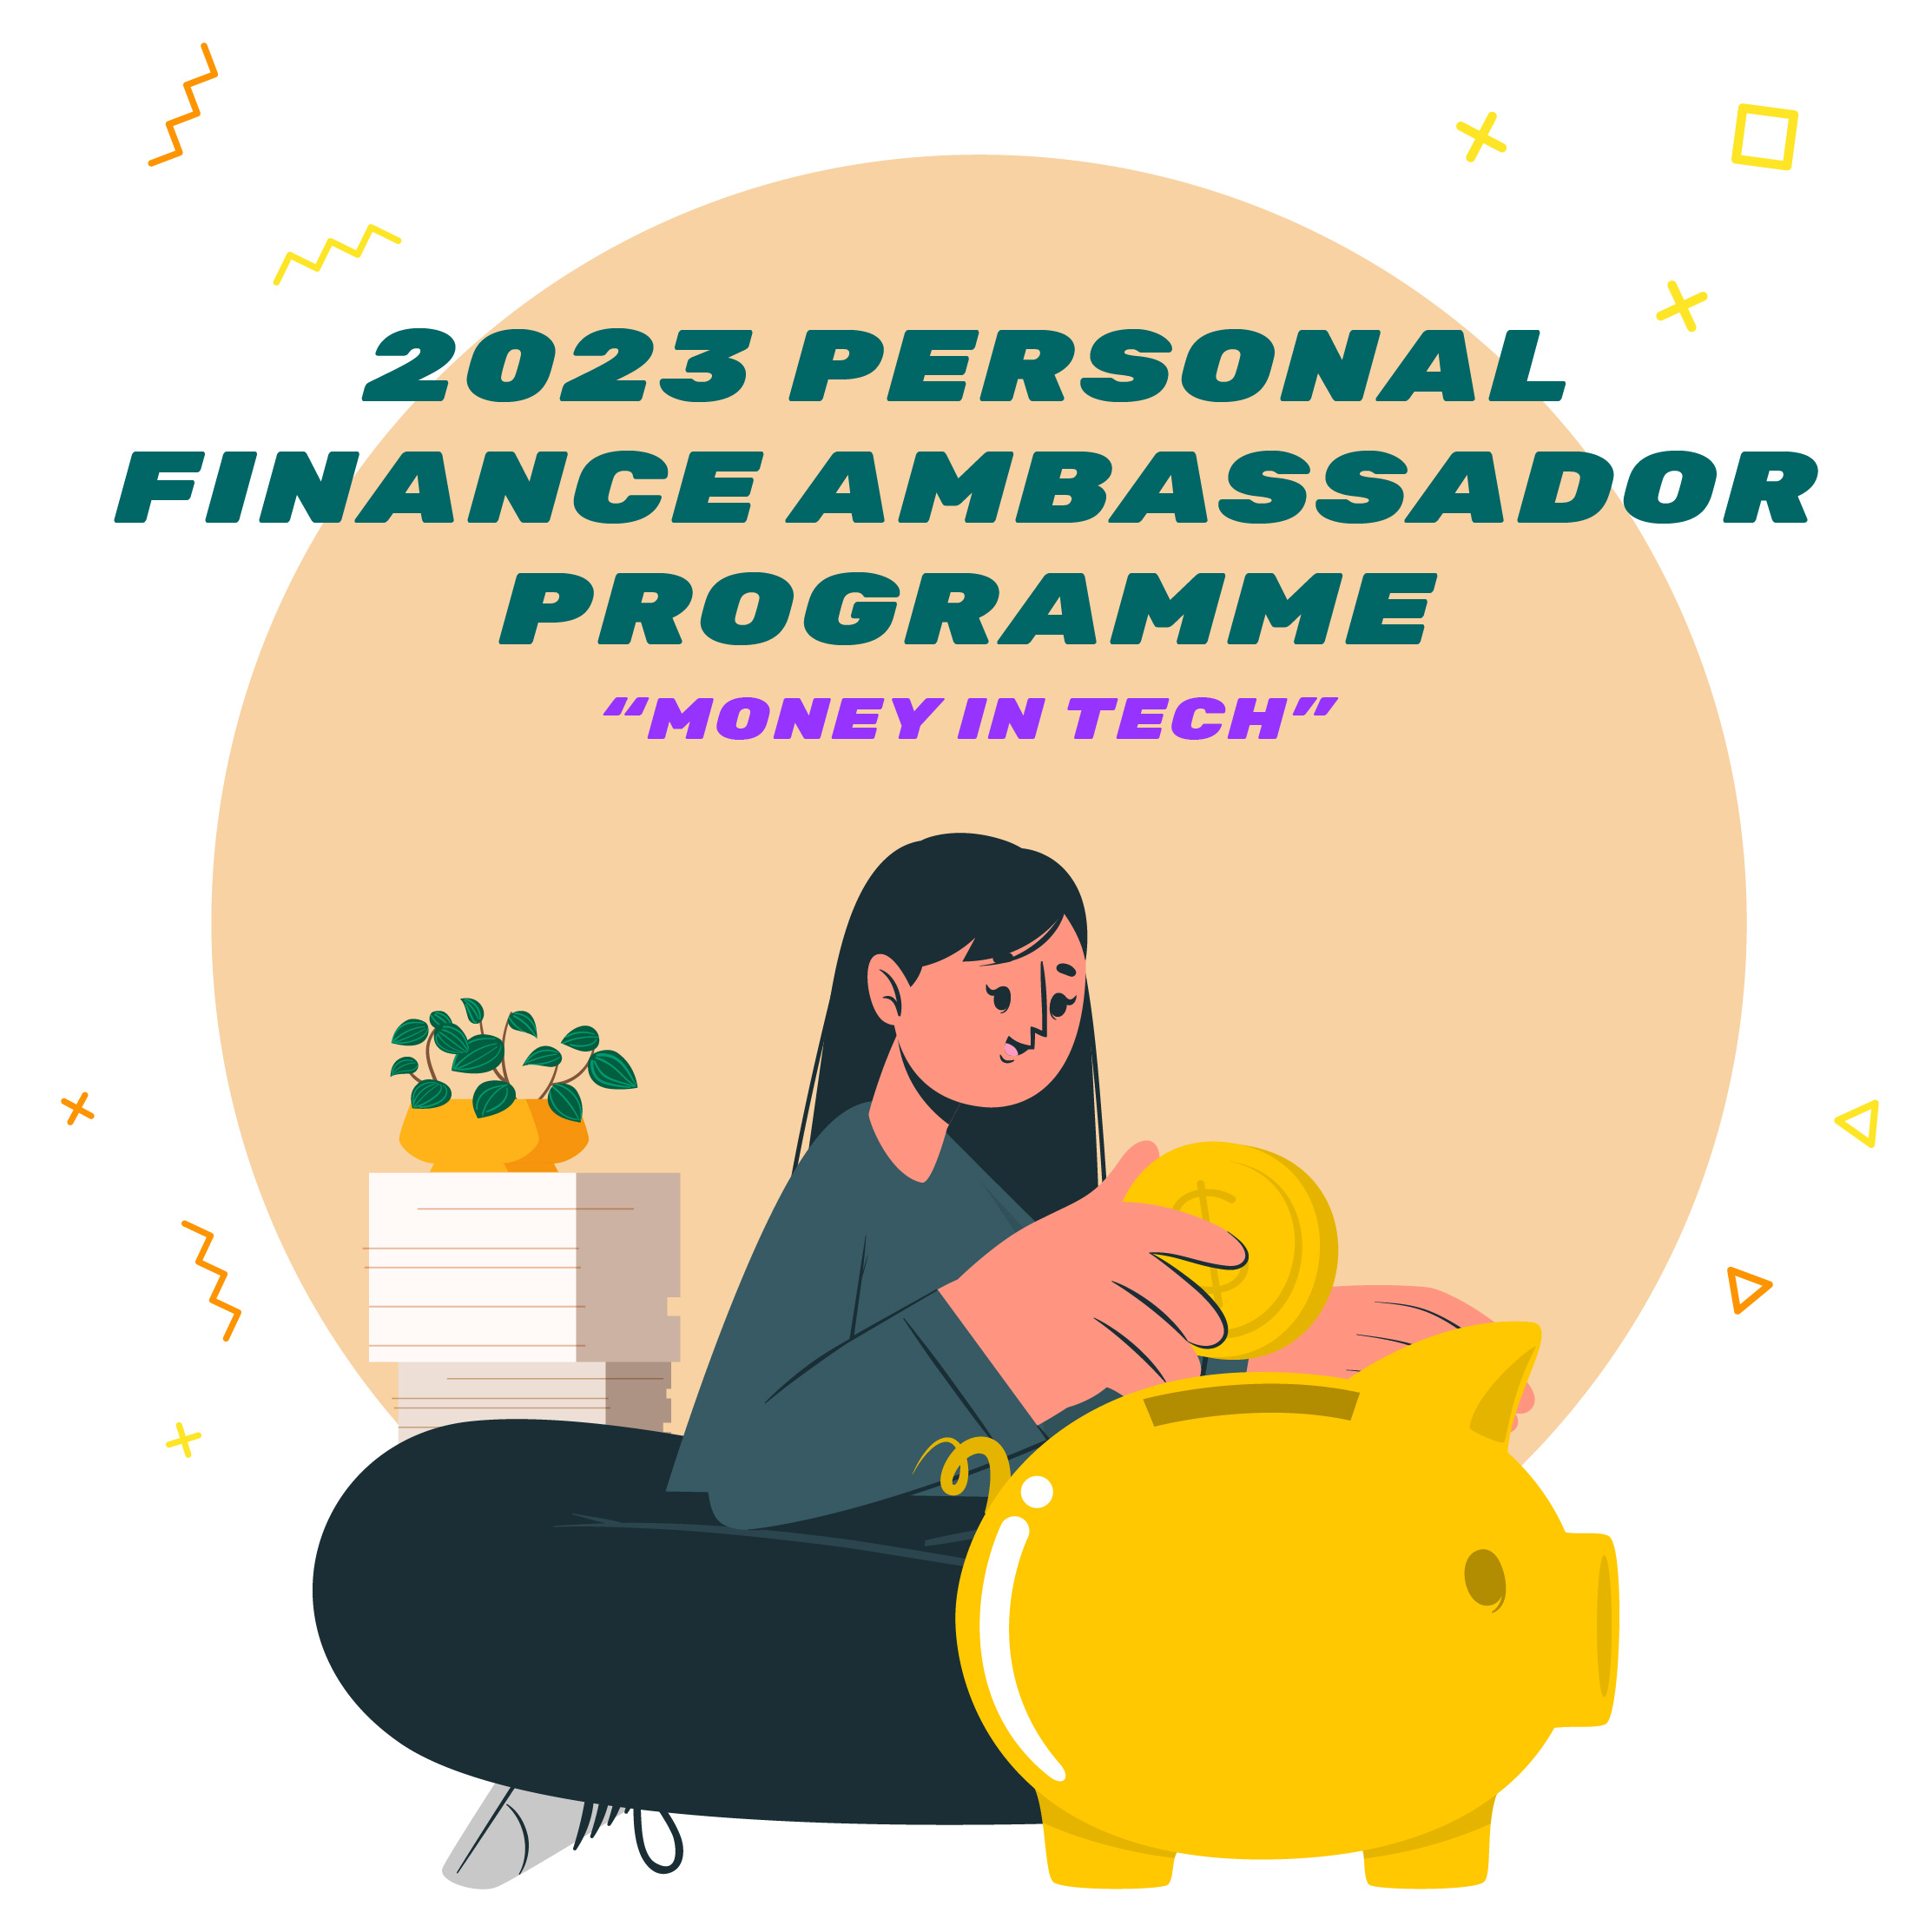 The Personal Finance Ambassador Programme 2023